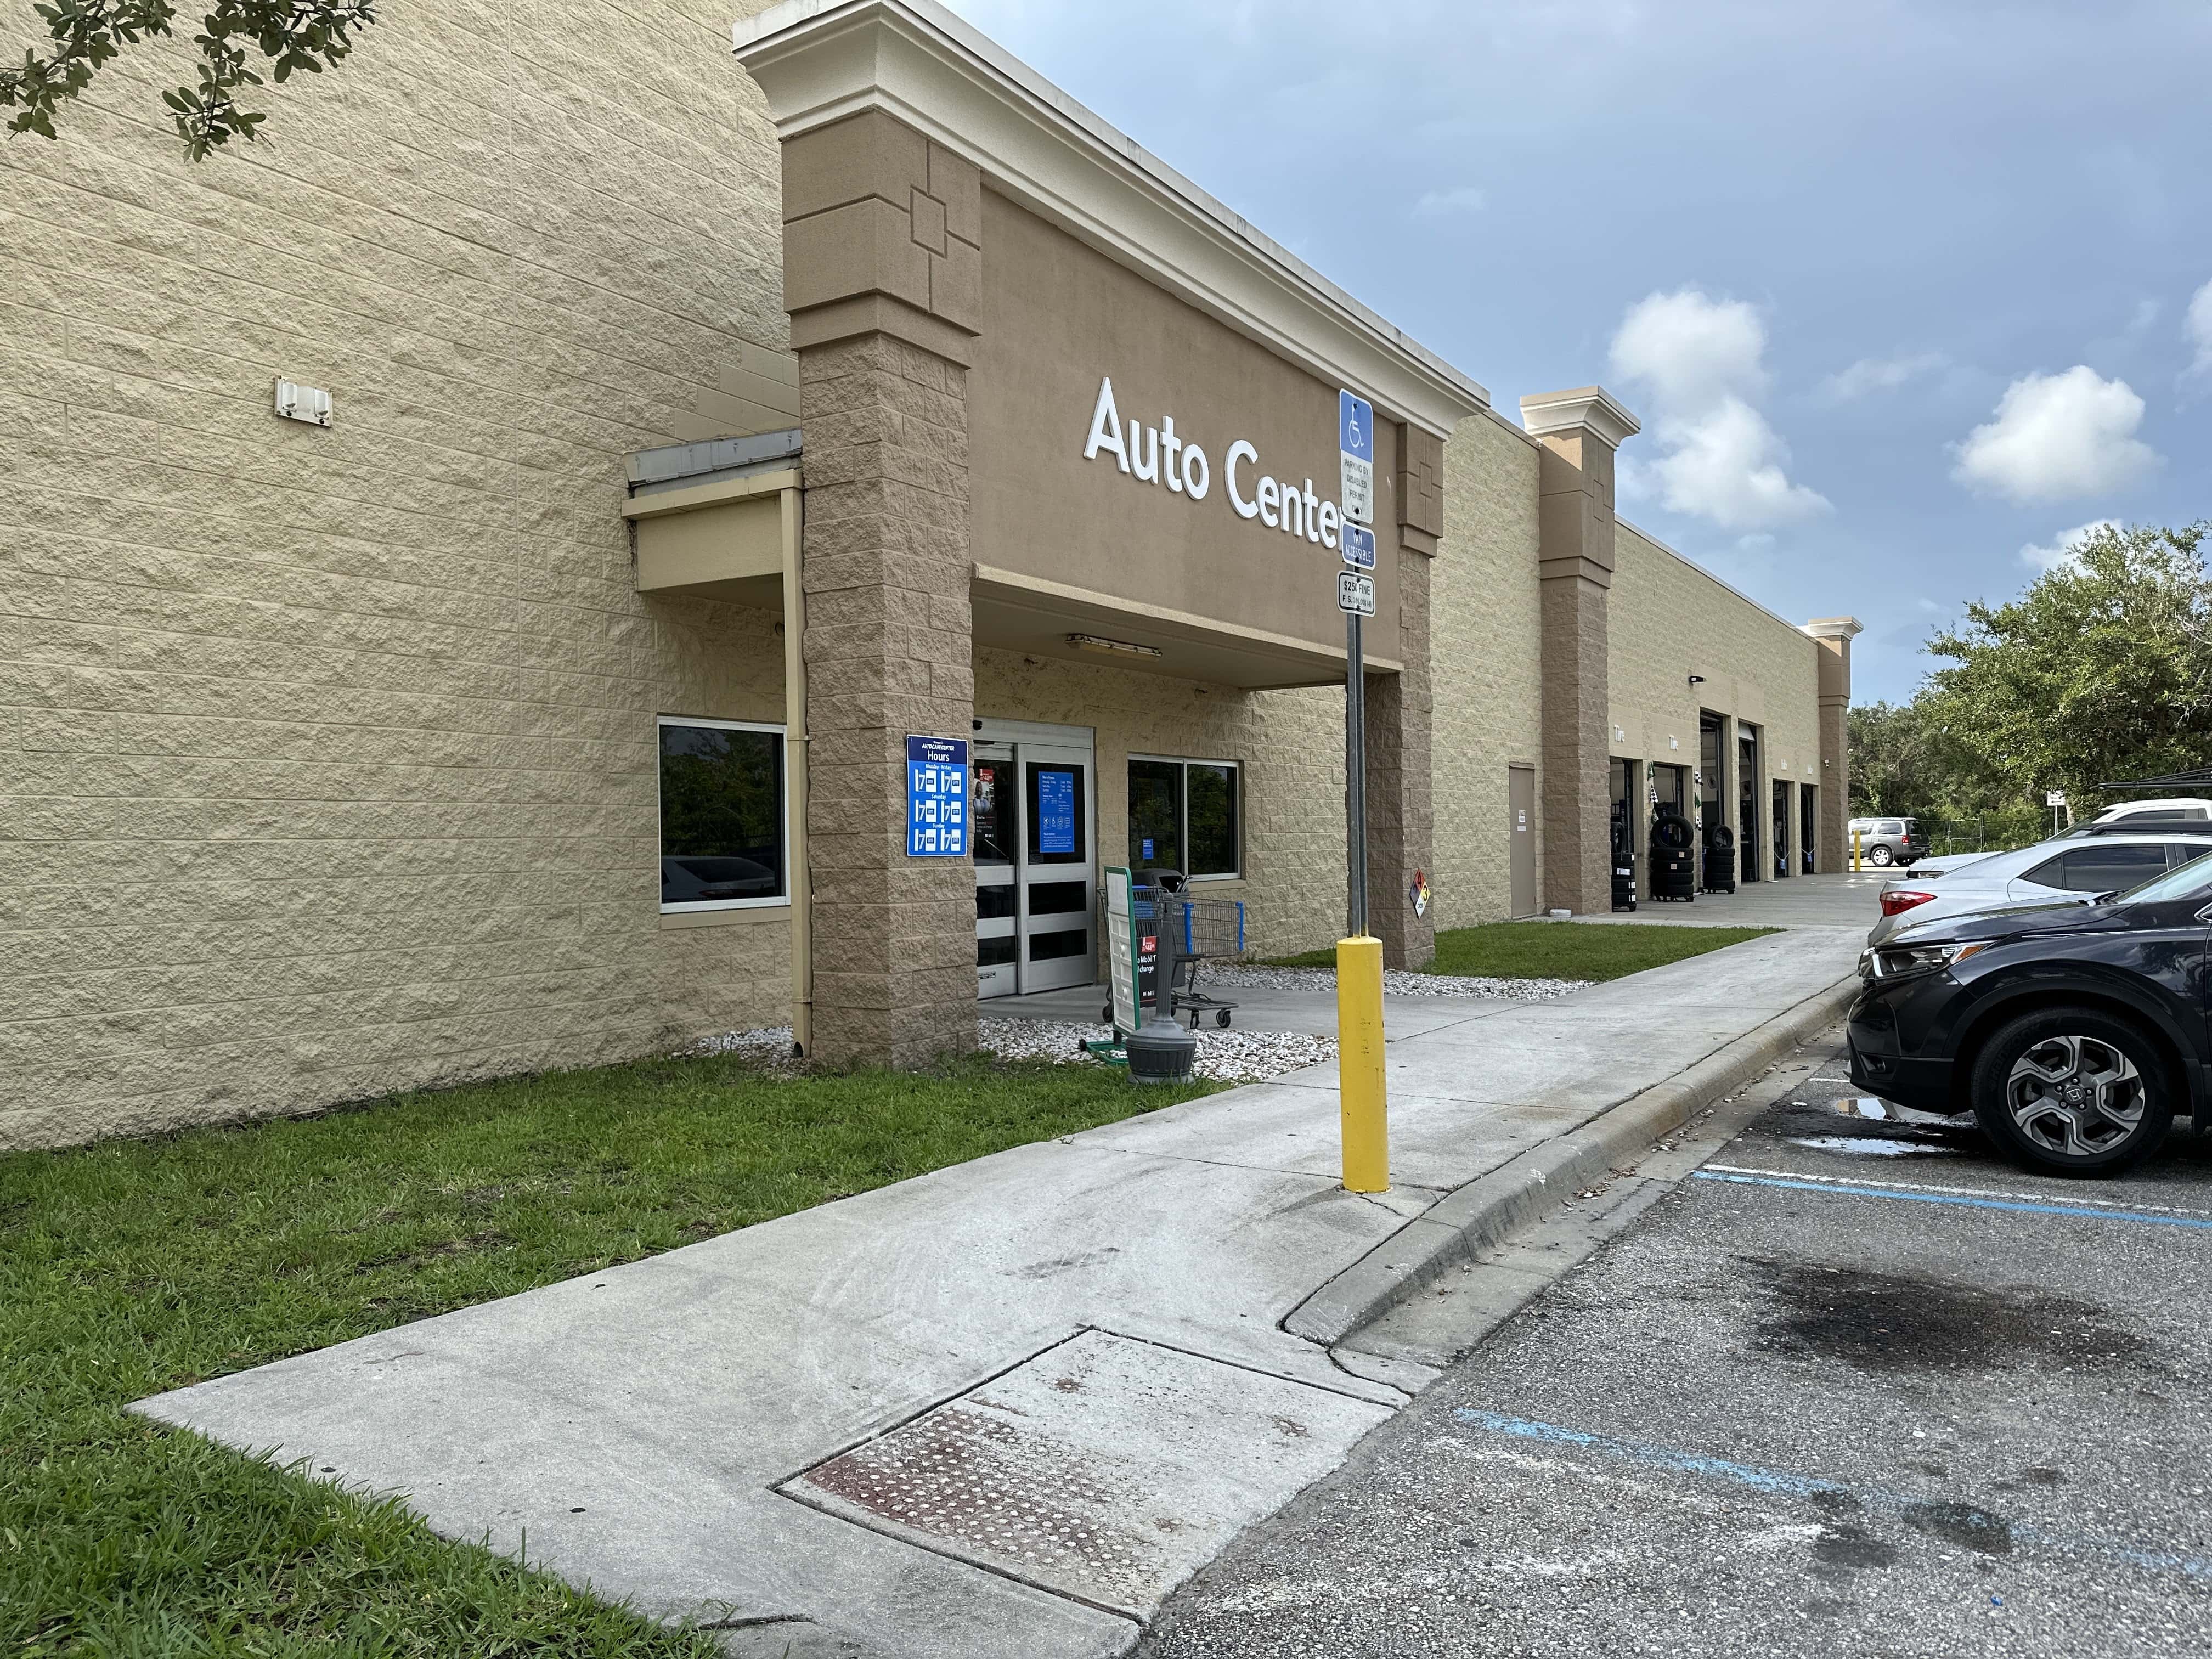 Walmart Auto Care Centers - North Port (FL 34287), US, mechanic shop near me